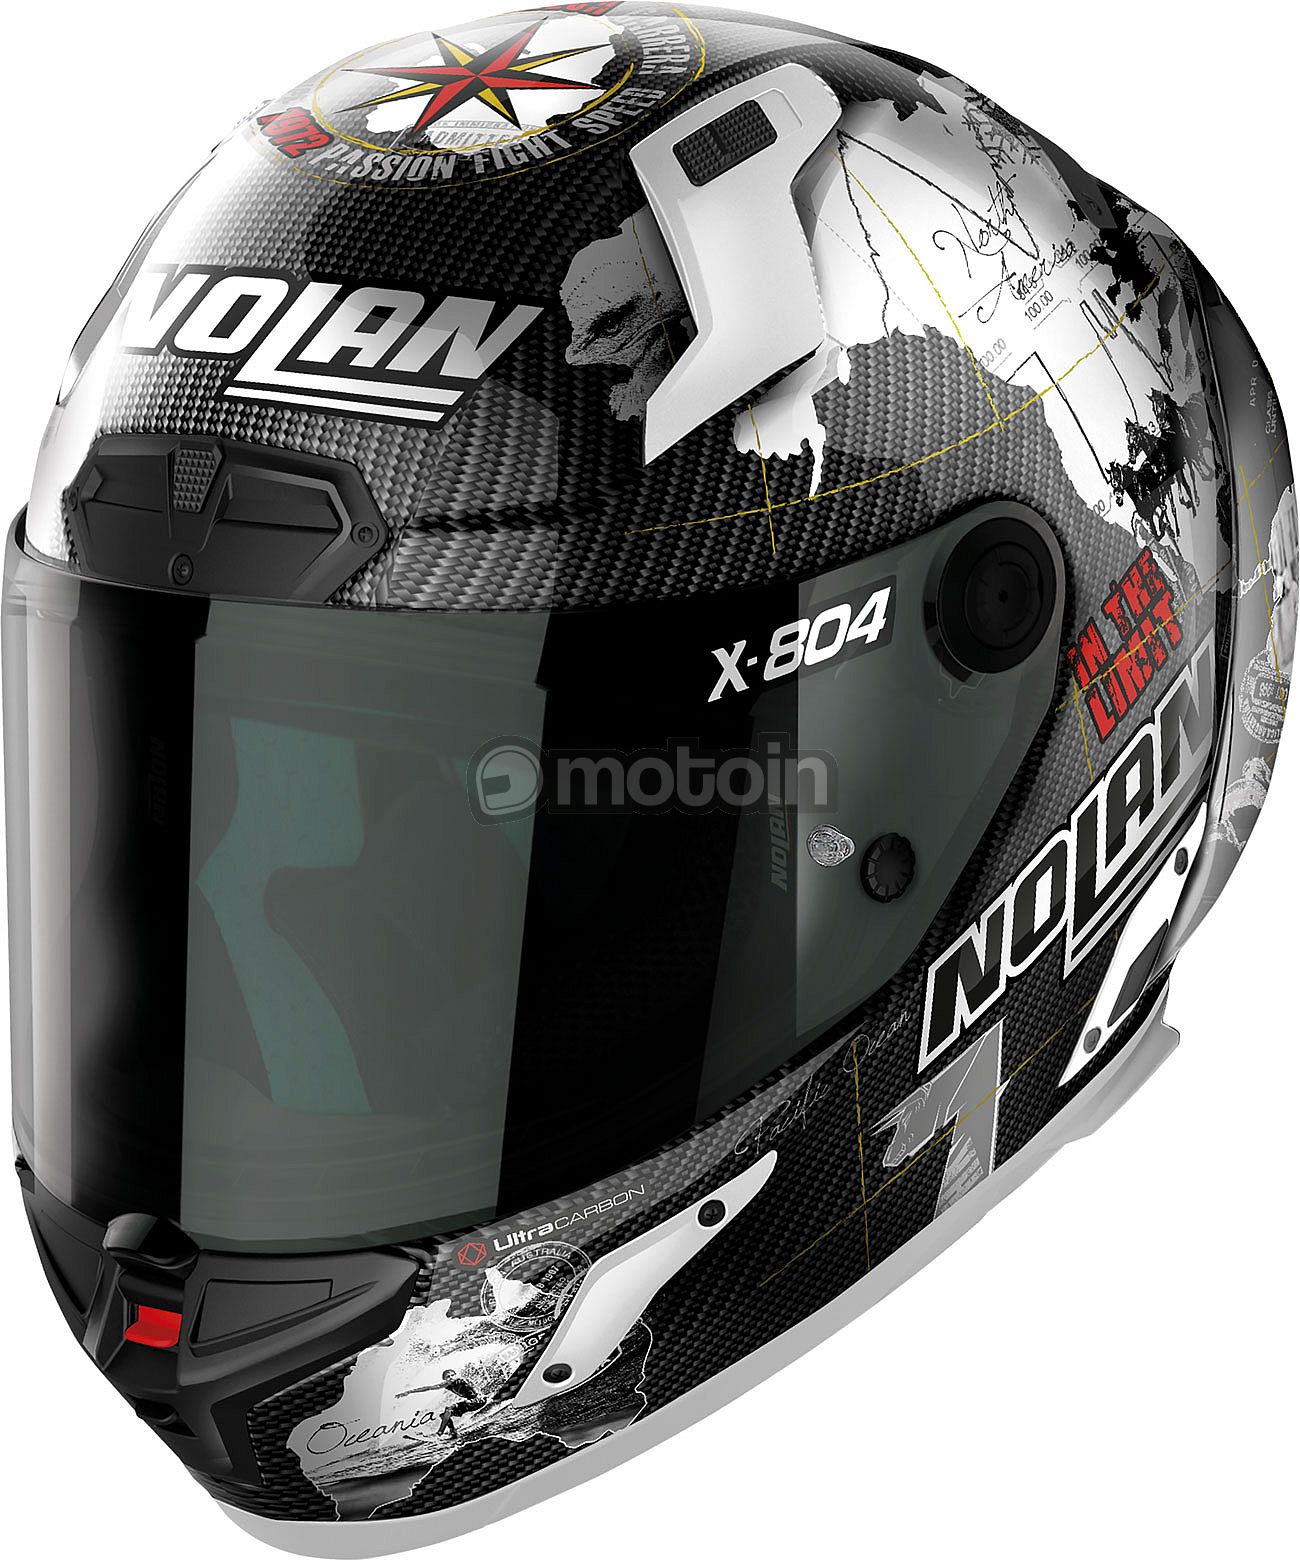 Nolan X-804 RS Ultra Carbon Checa, full face helmet